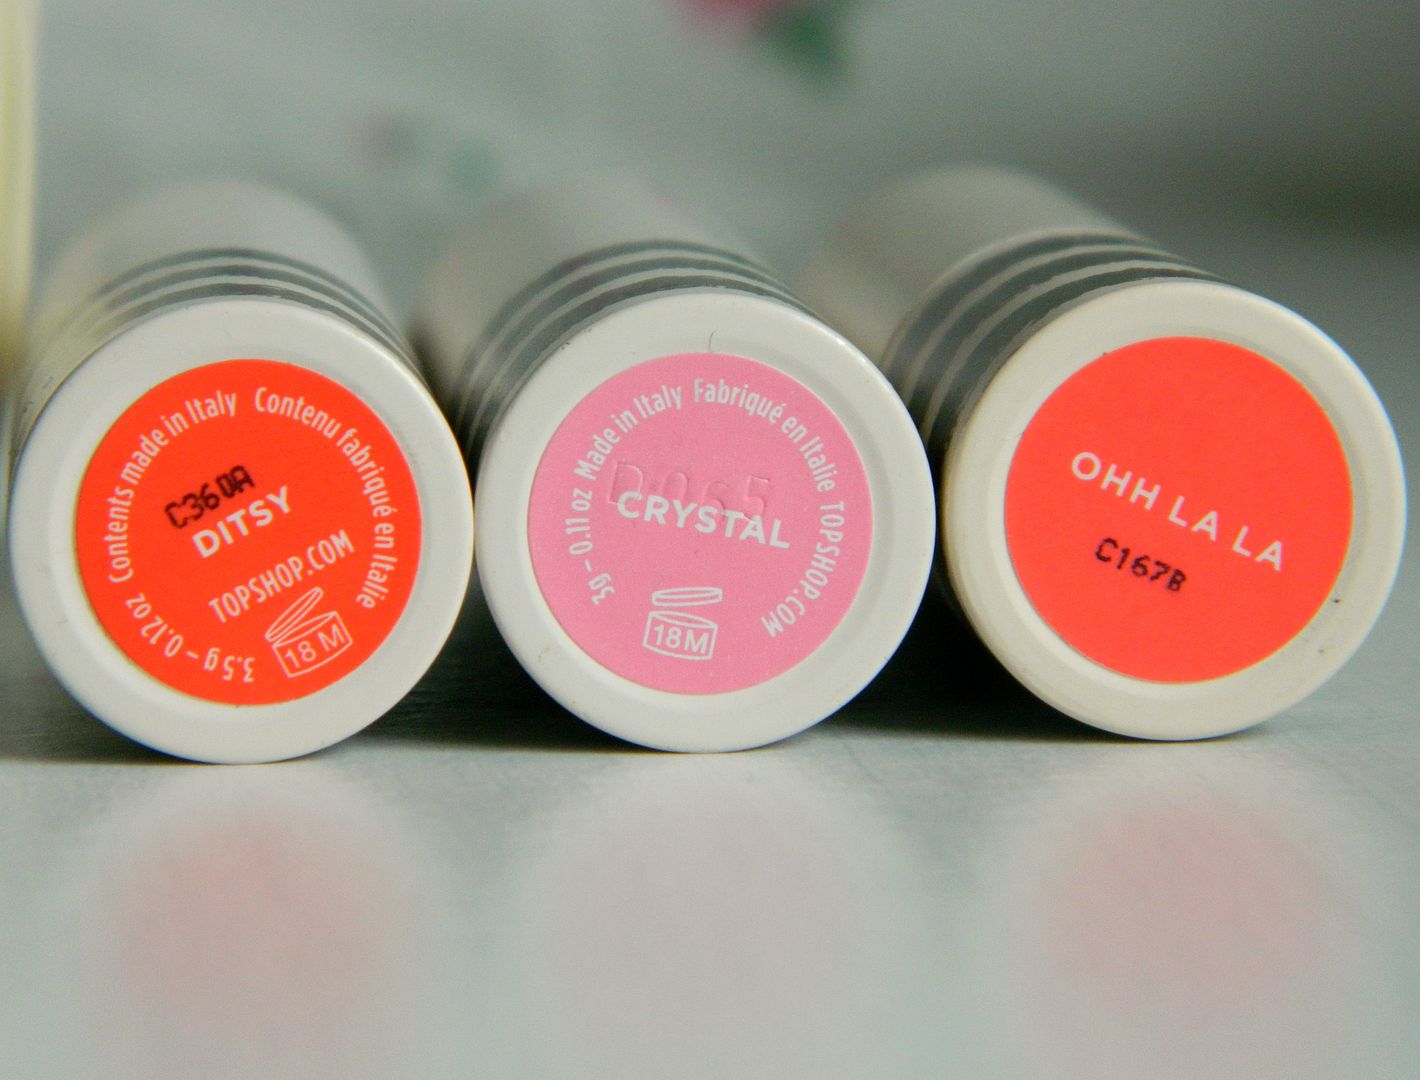 Topshop Lips Lipsticks Review Ditsy Crystal Ohh La La Labels Review Belle-amie